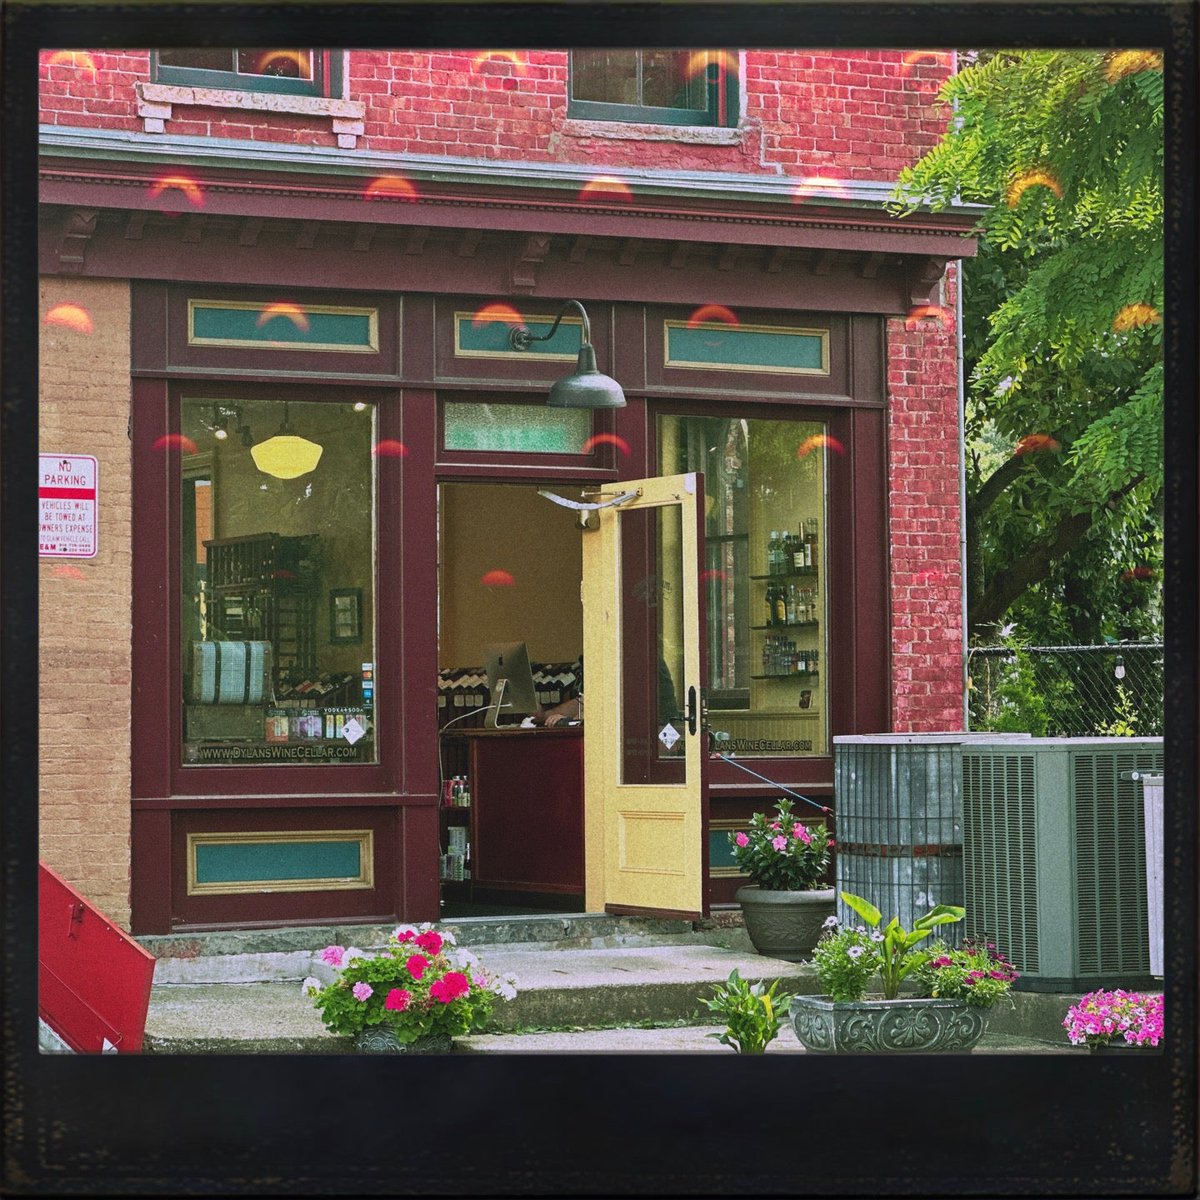 My fav wine store! 😍 (@ Dylan's Wine Cellar in Peekskill, NY) swarmapp.com/c/bkMs79b3bCv